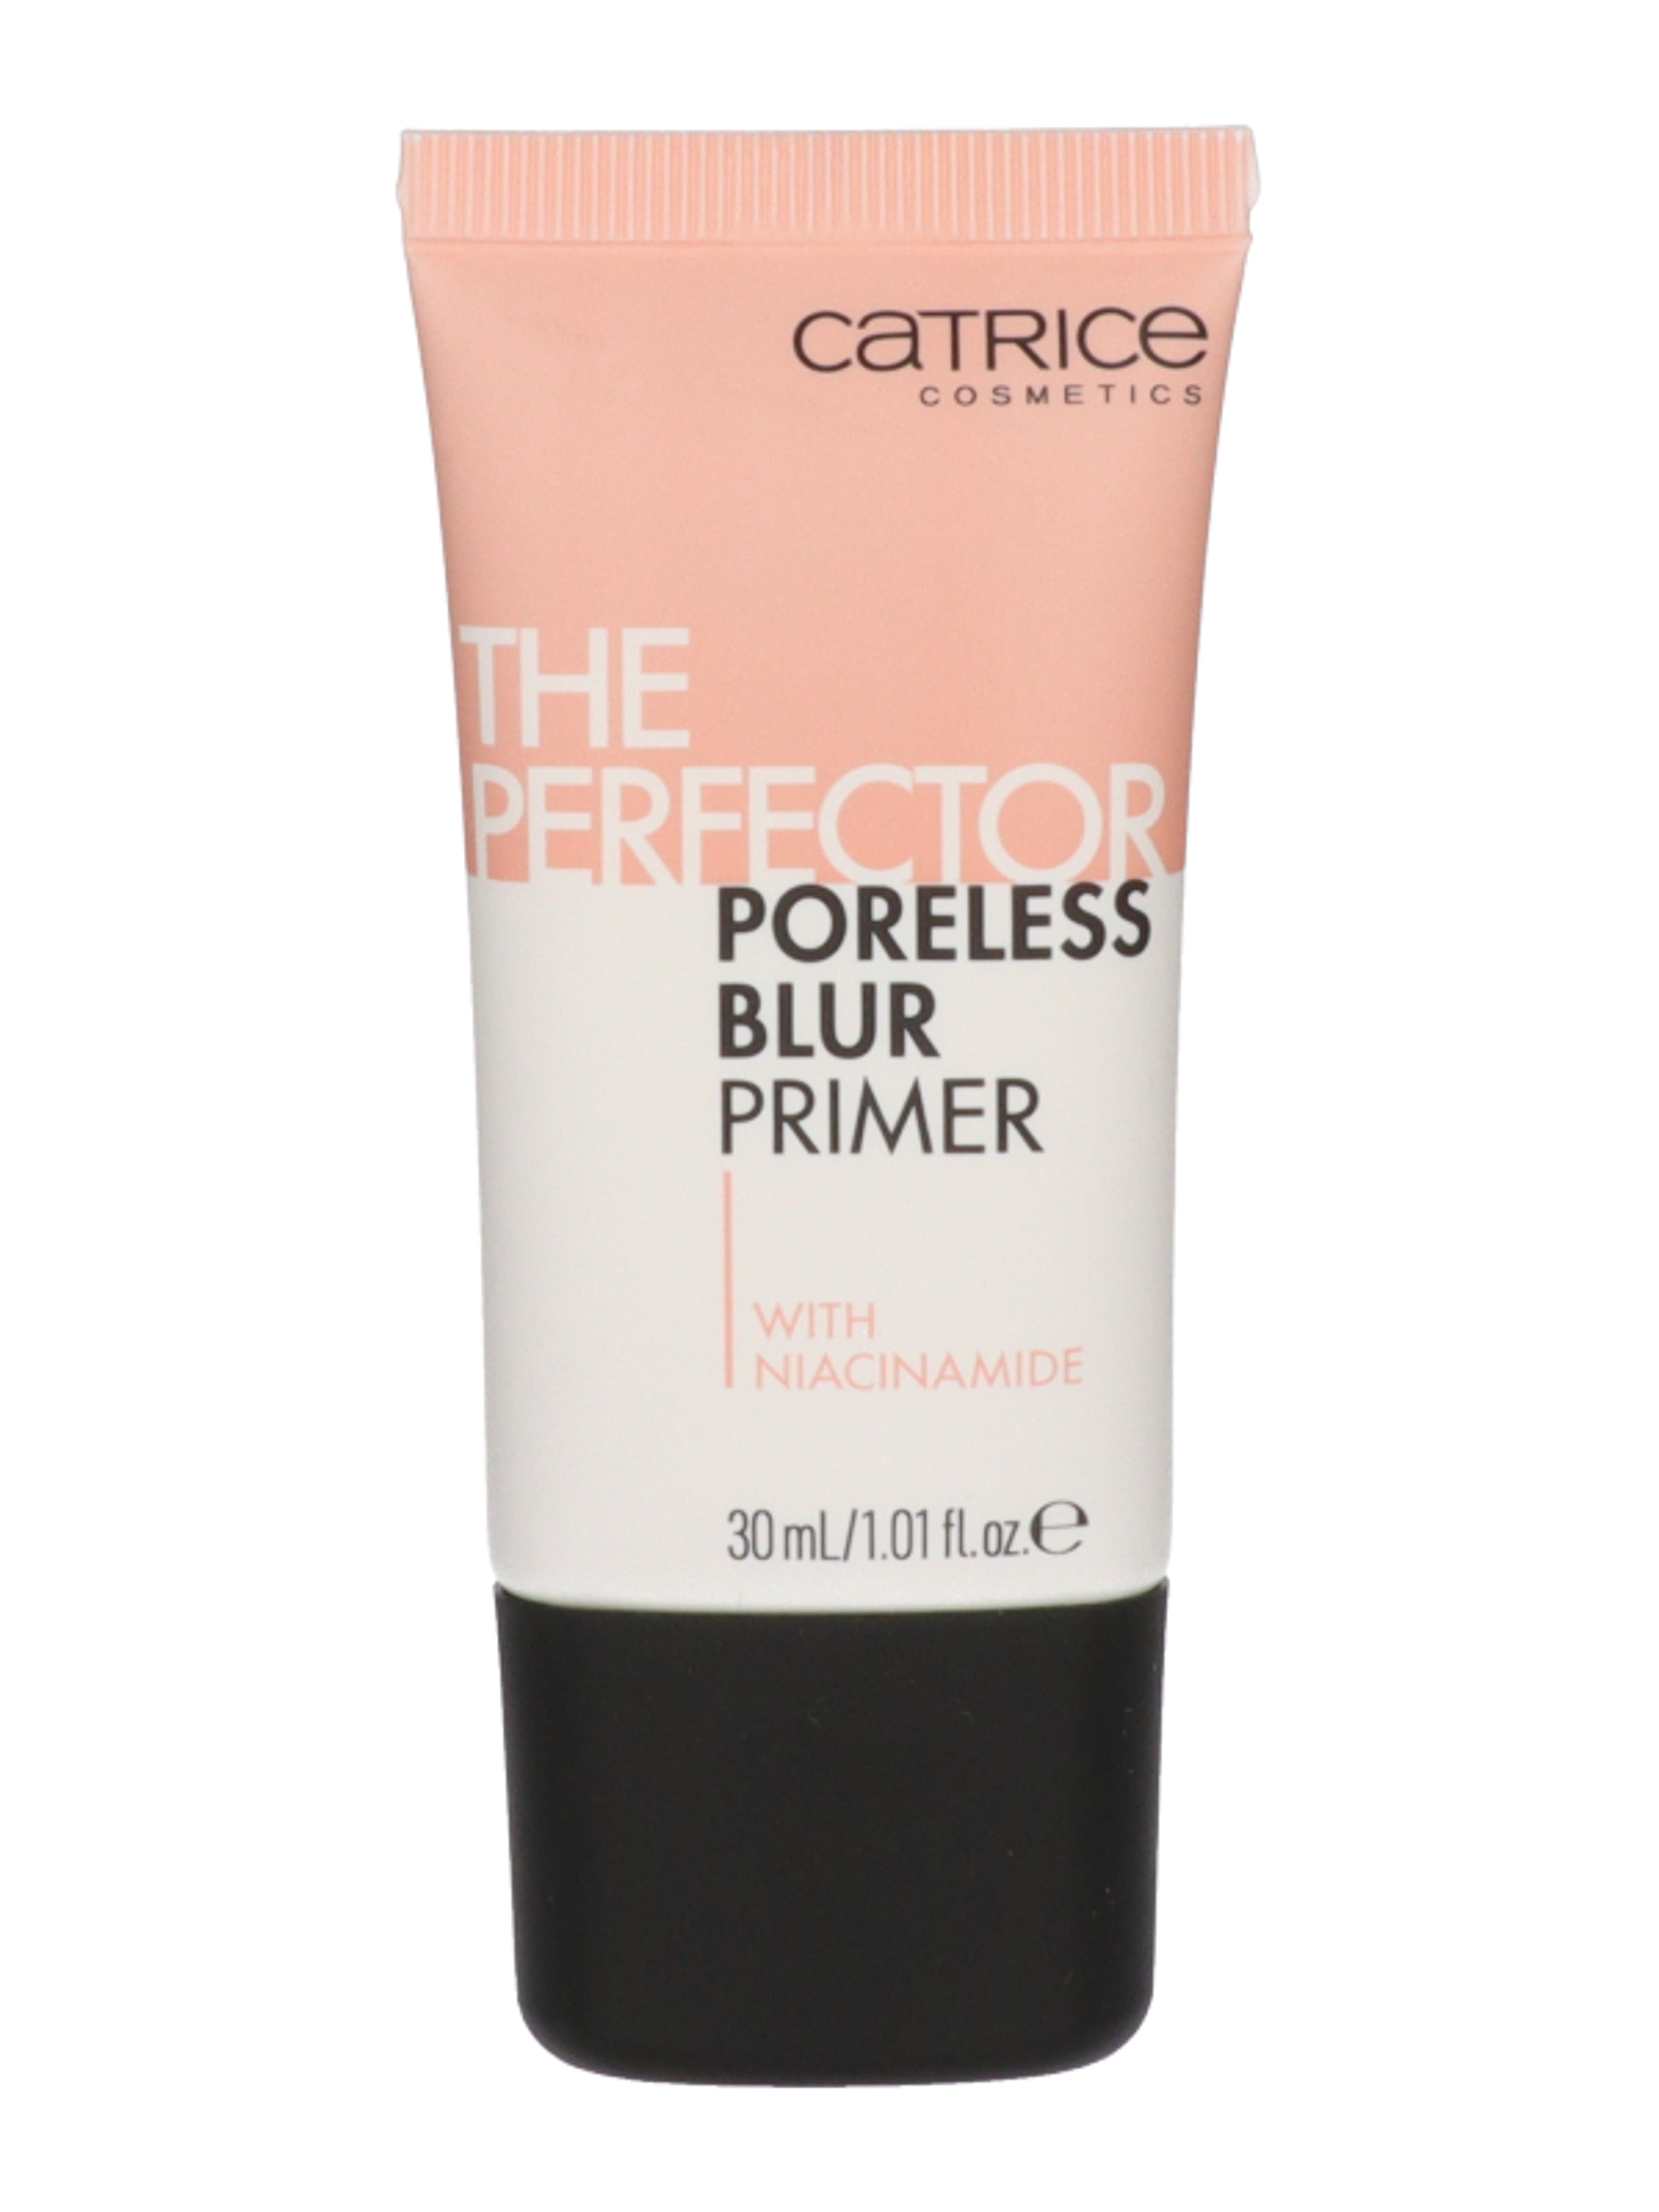 Catrice Blur The Perfector Poreless Primer - 1 db-3